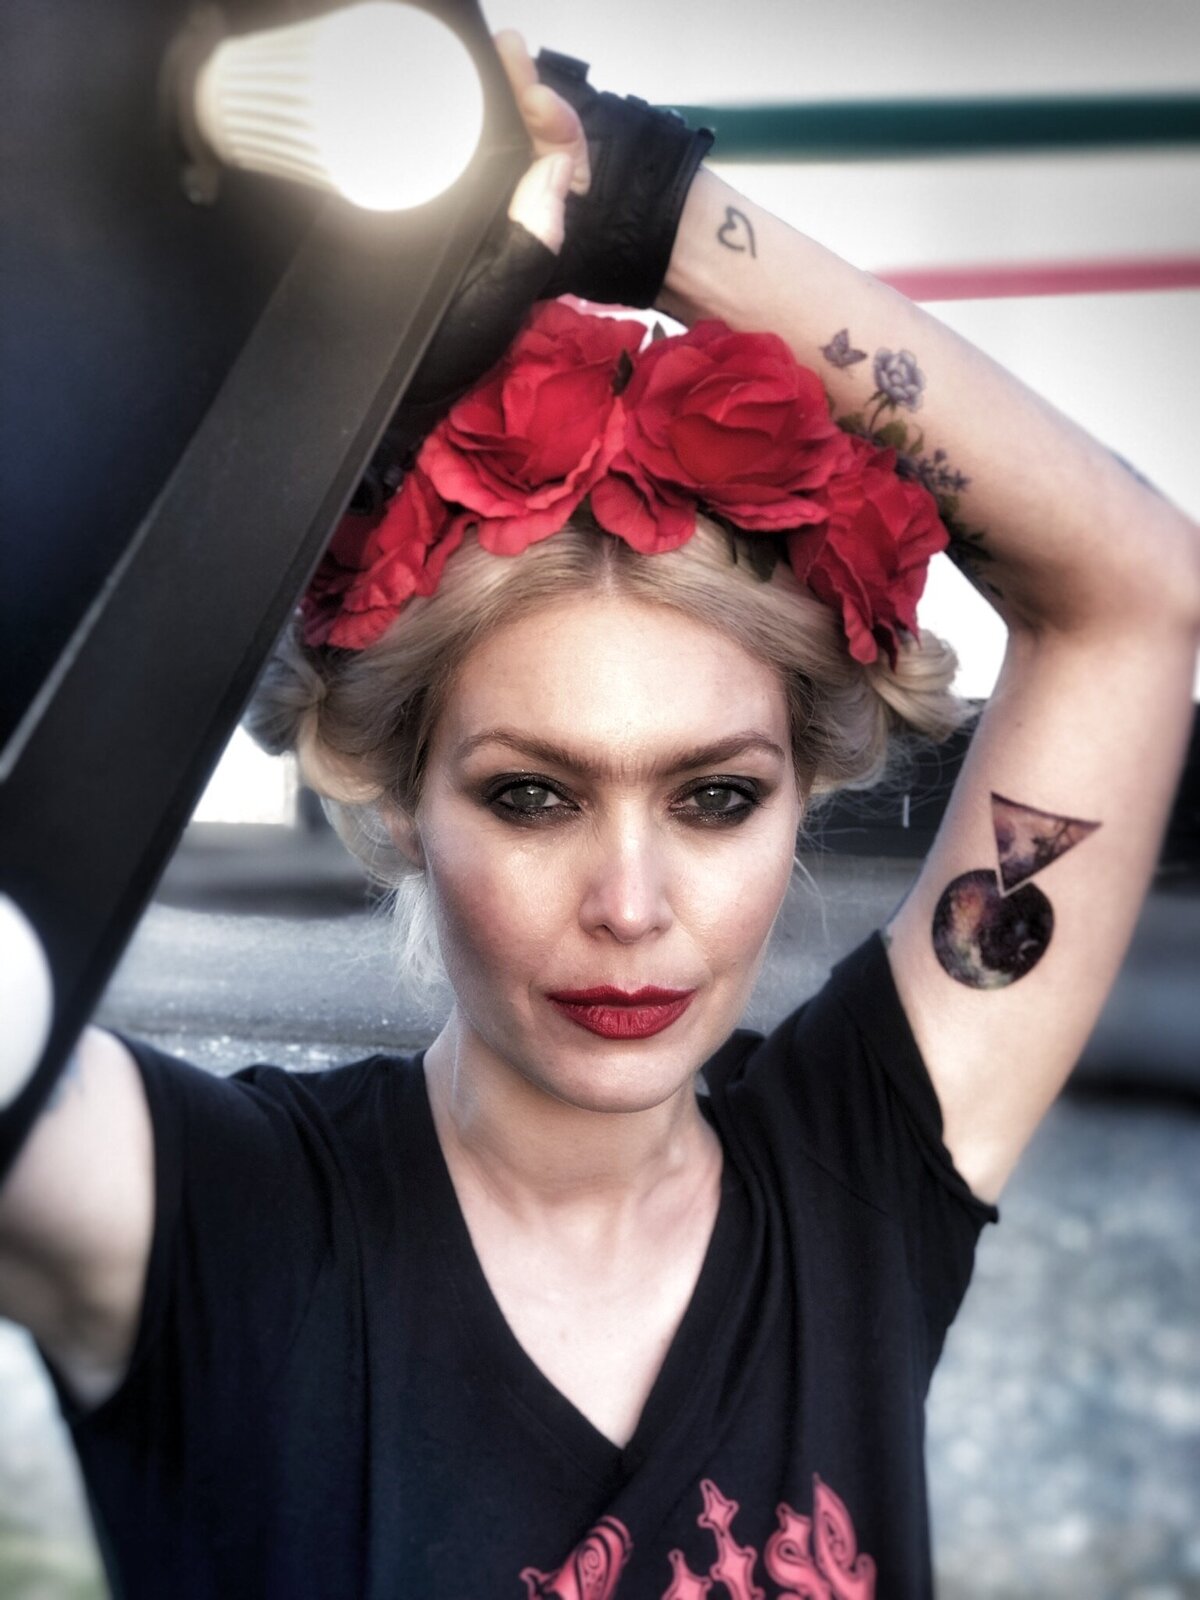 woman-flower-headpiece-tattoos-smoky-eye-makeup-film-television